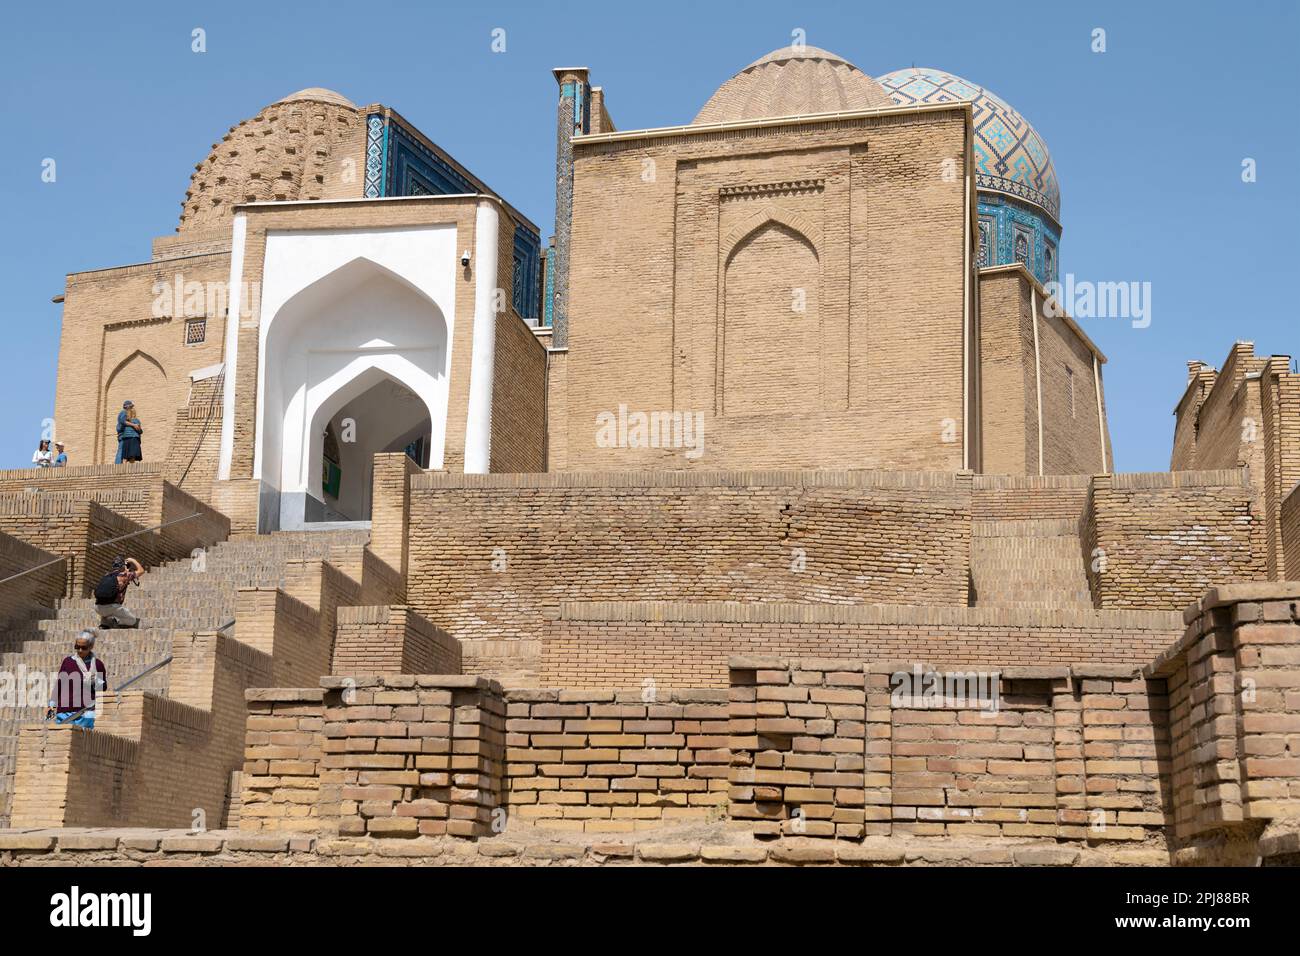 SAMARKAND, UZBEKISTAN - SEPTEMBER 12, 2022: View of the medieval mausoleums of the Shahi-Zinda necropolis on a sunny day Stock Photo